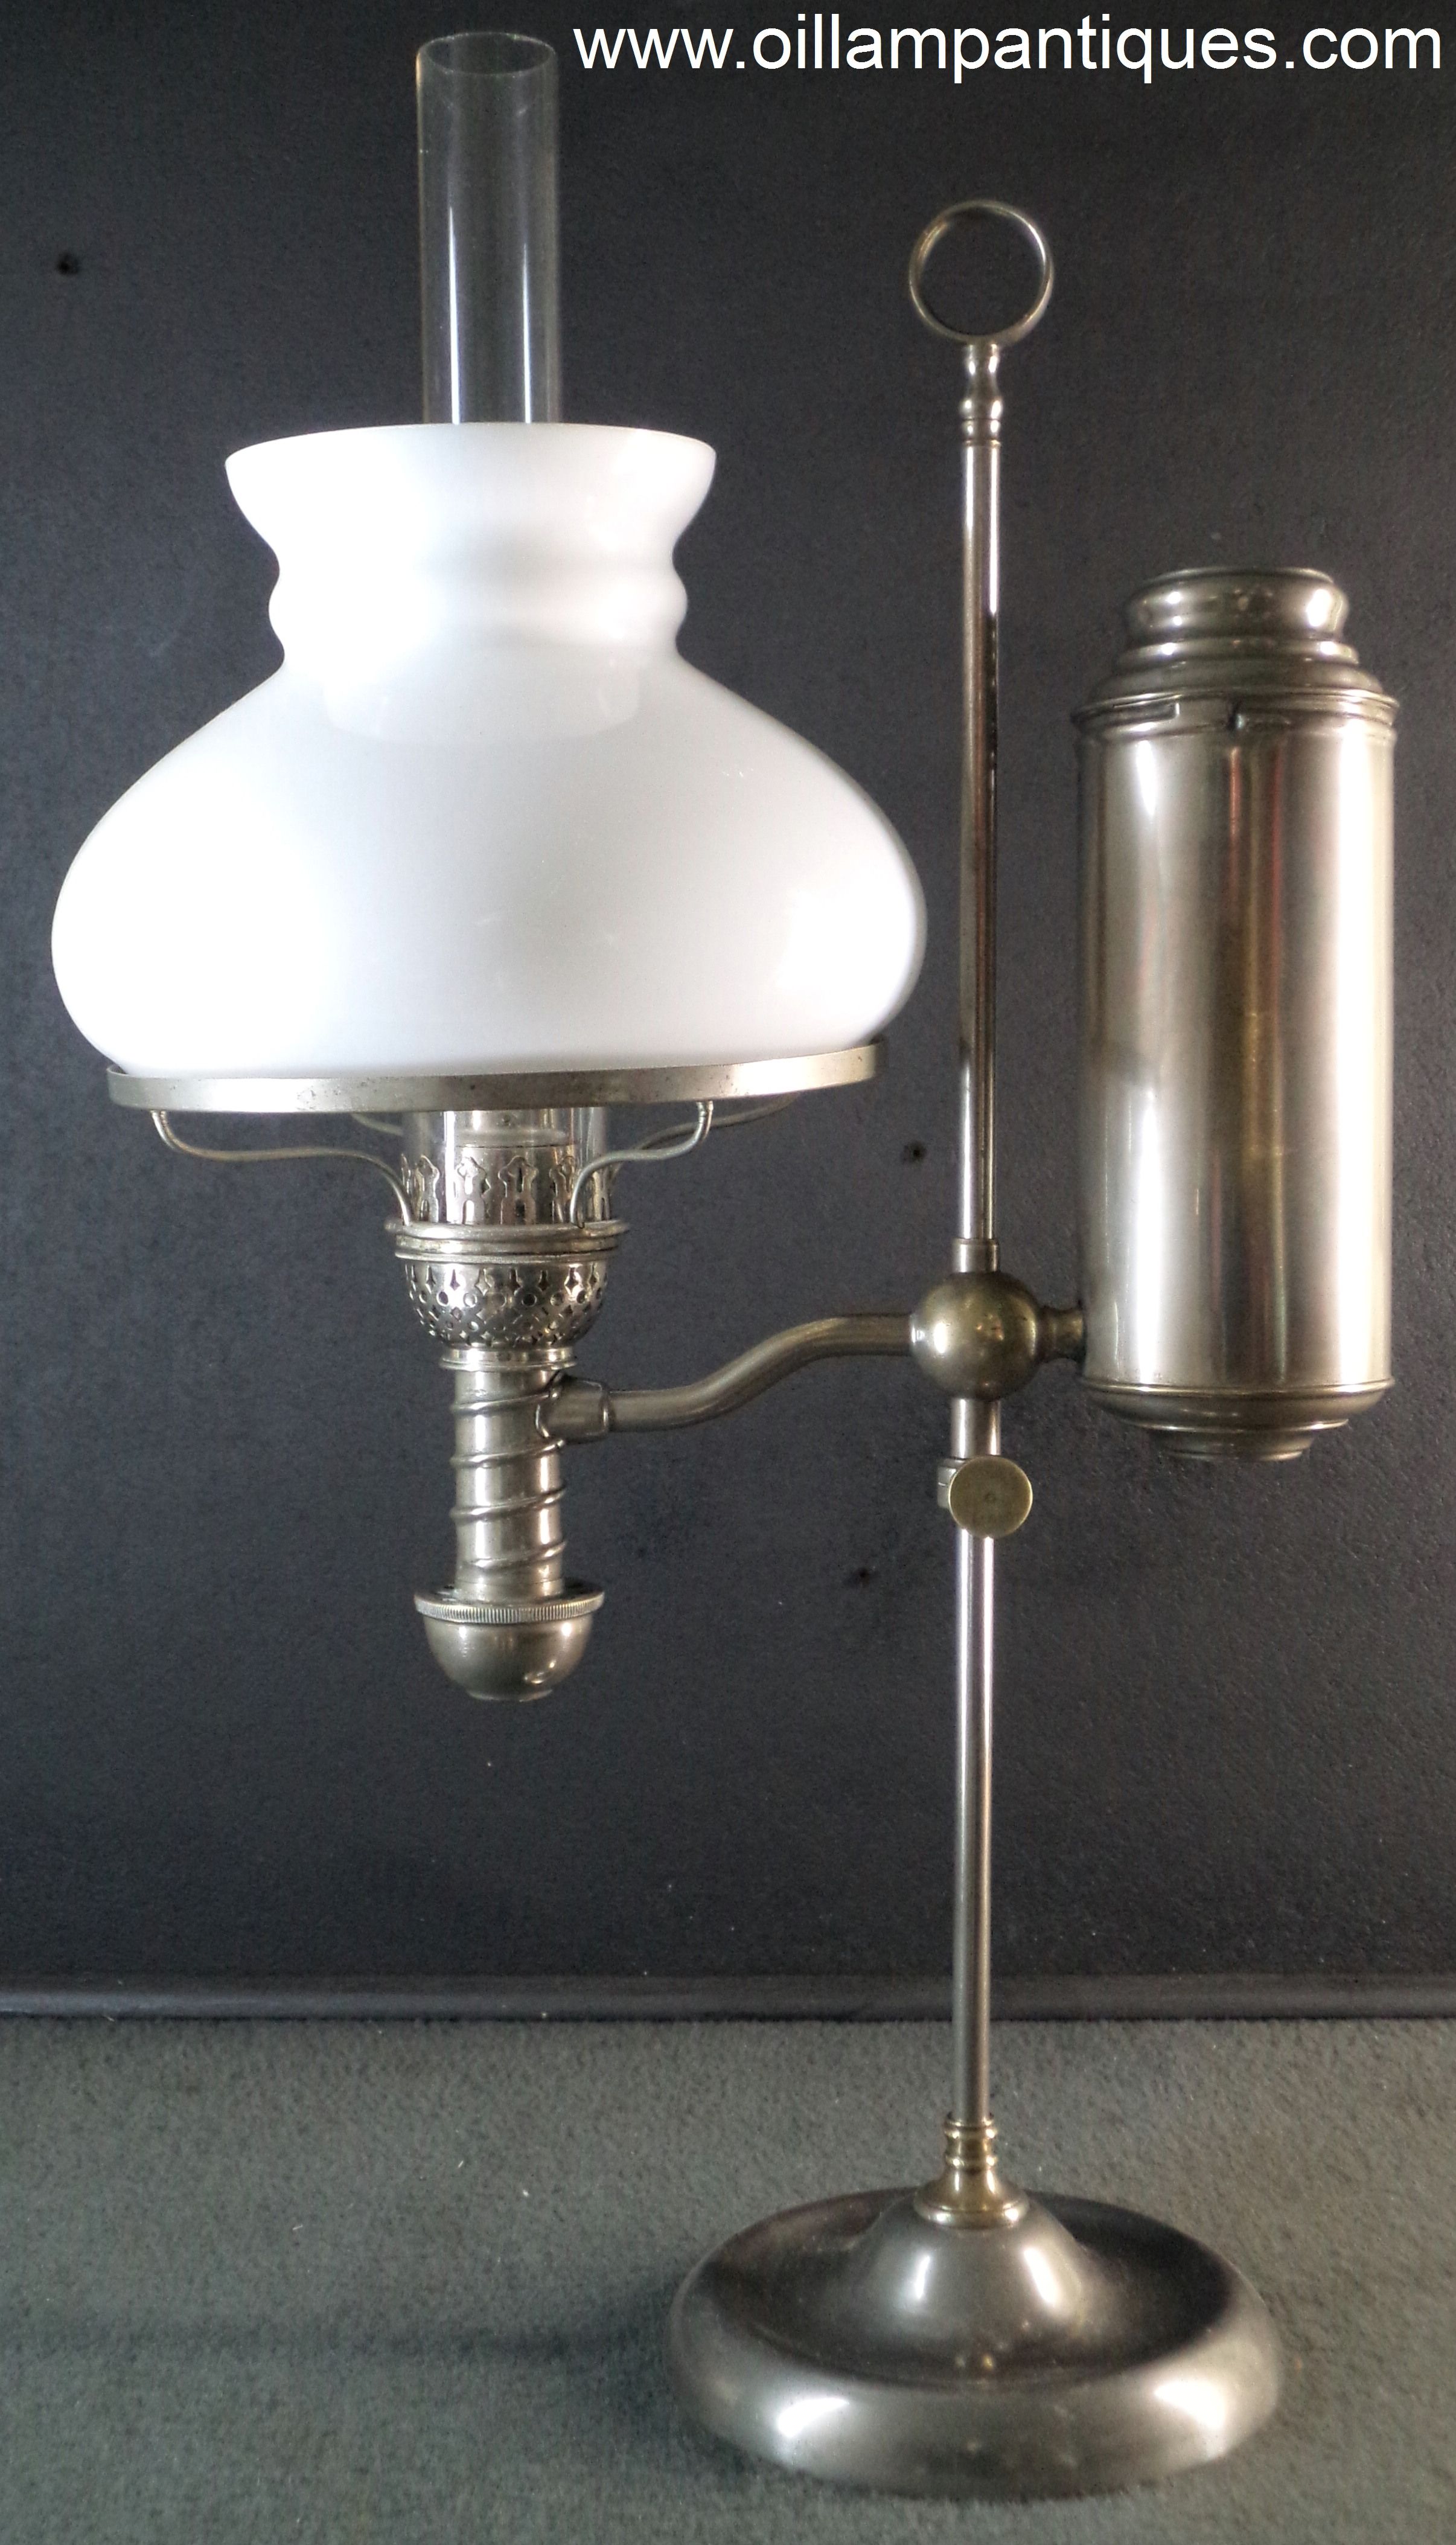 Manhattan Nickel Student Antique Oil Lamp Kerosene Lamp | СВЕТ ...